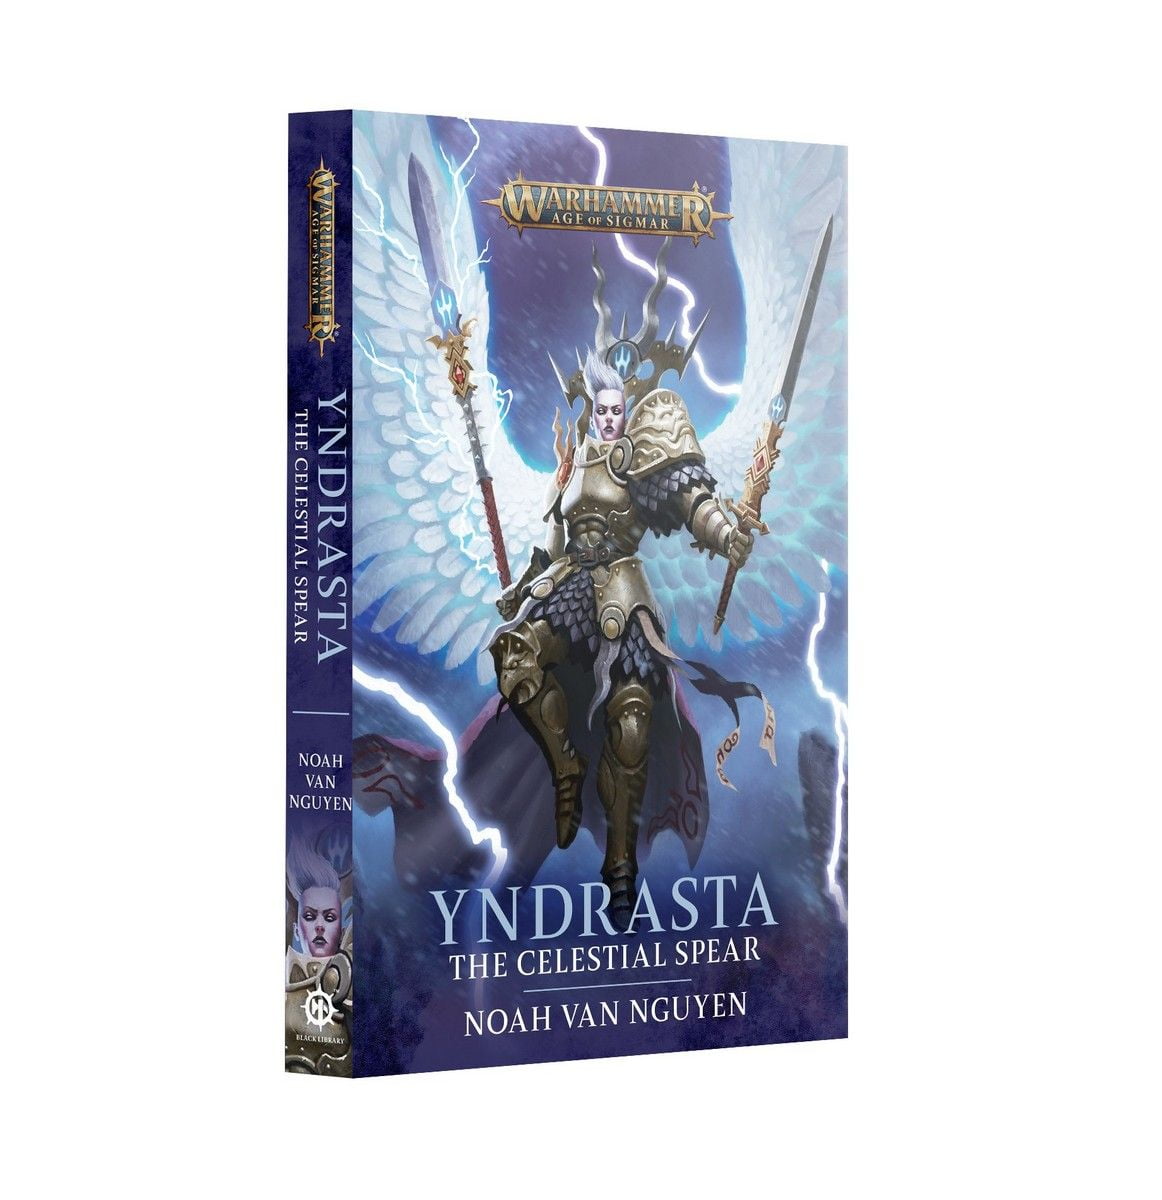 Yndrasta: The Celestial Spear Paperback